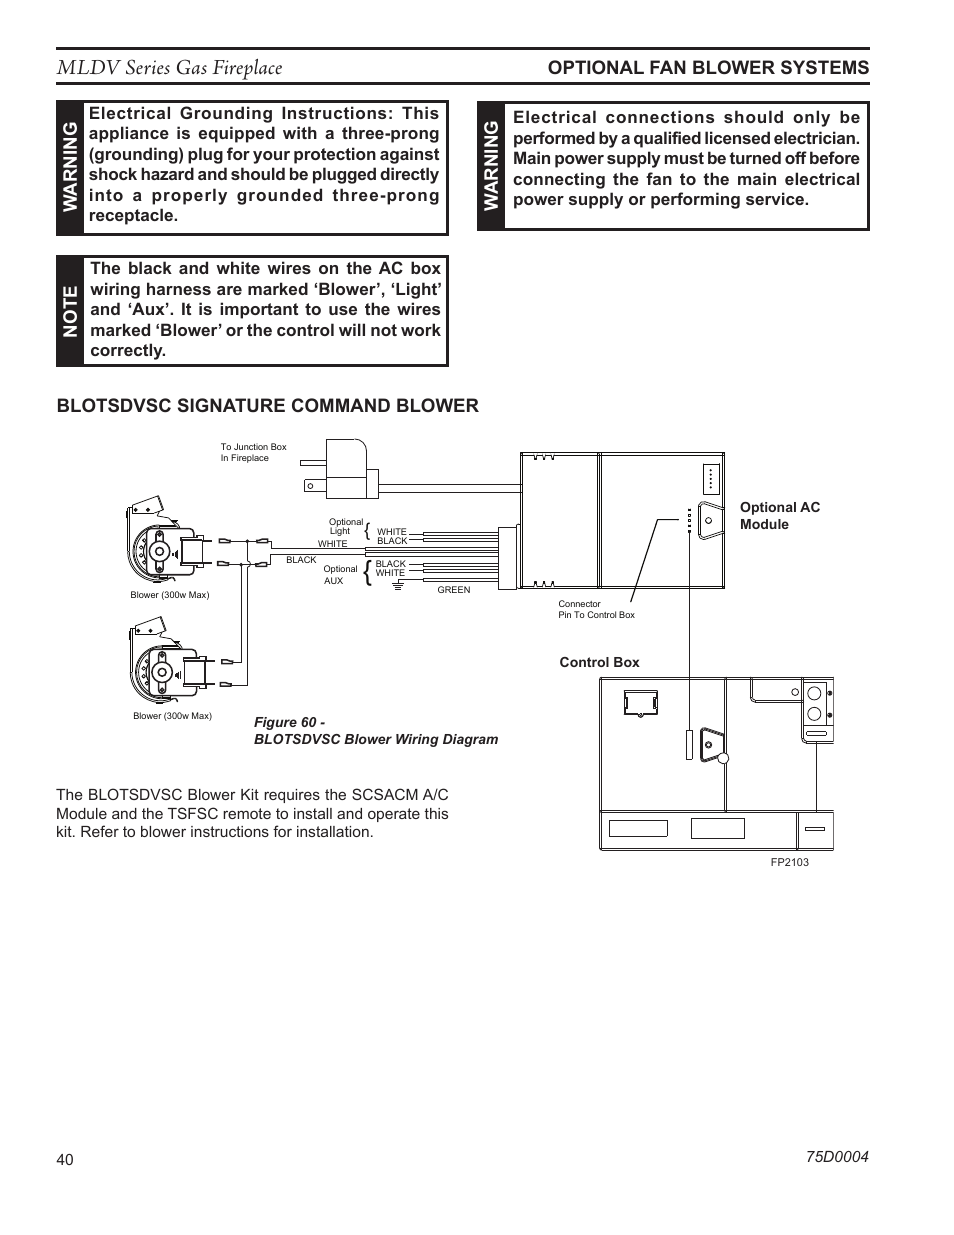 Mldv series gas fireplace, Fp2684 blotsdvsc fan wiring, Warning | Blotsdvsc signature command blower | Monessen Hearth DIRECT VENT MLDV500 User Manual | Page 40 / 68